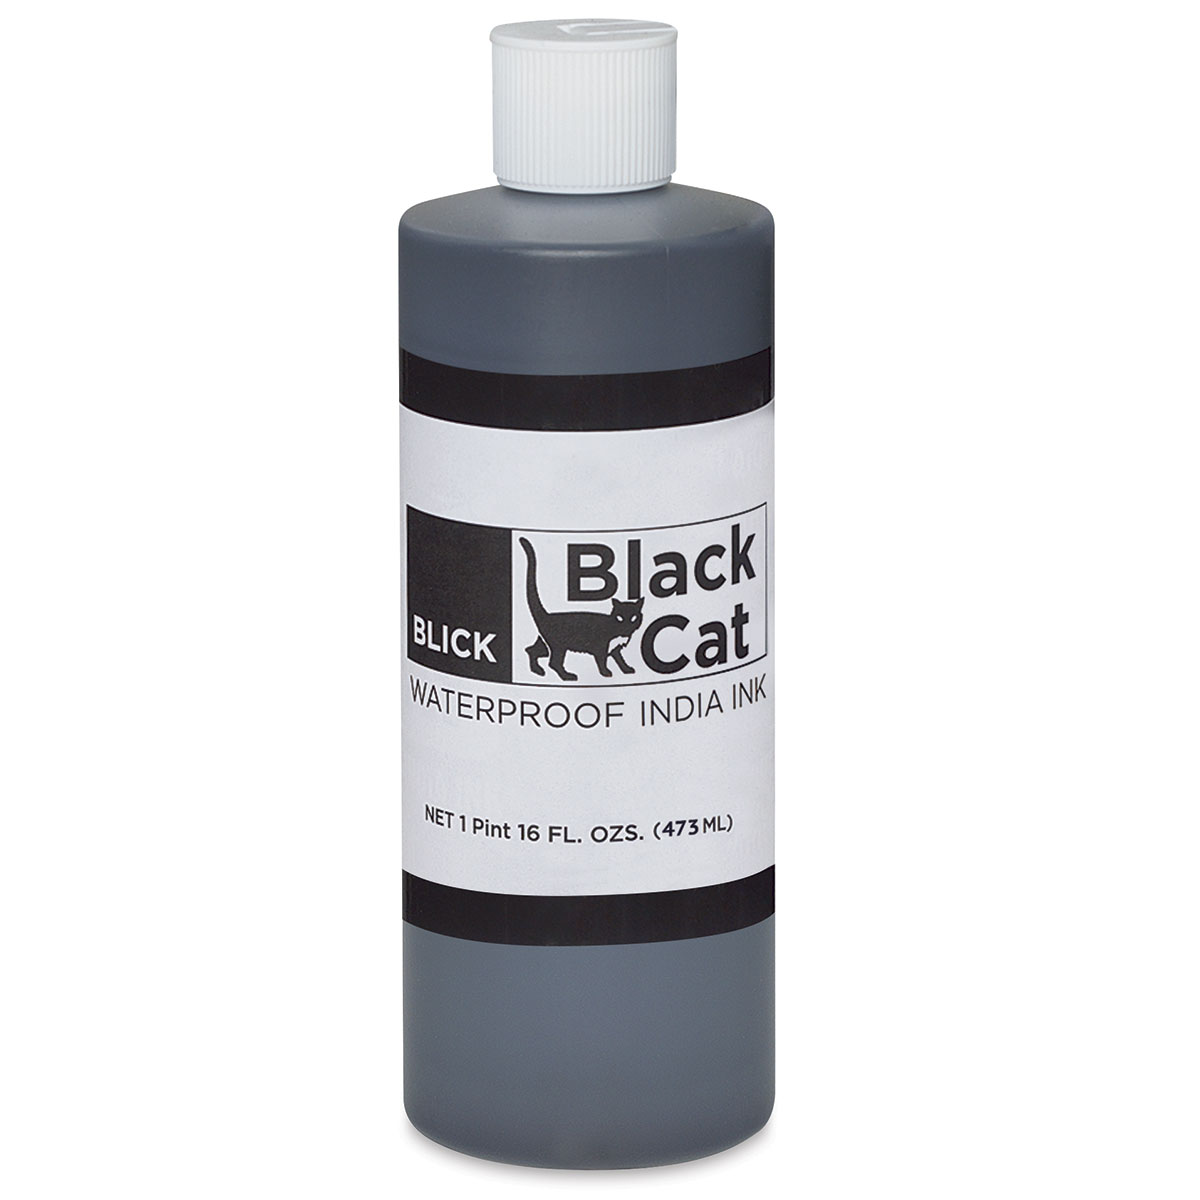 Blick Black Cat Waterproof India Ink - 3 oz